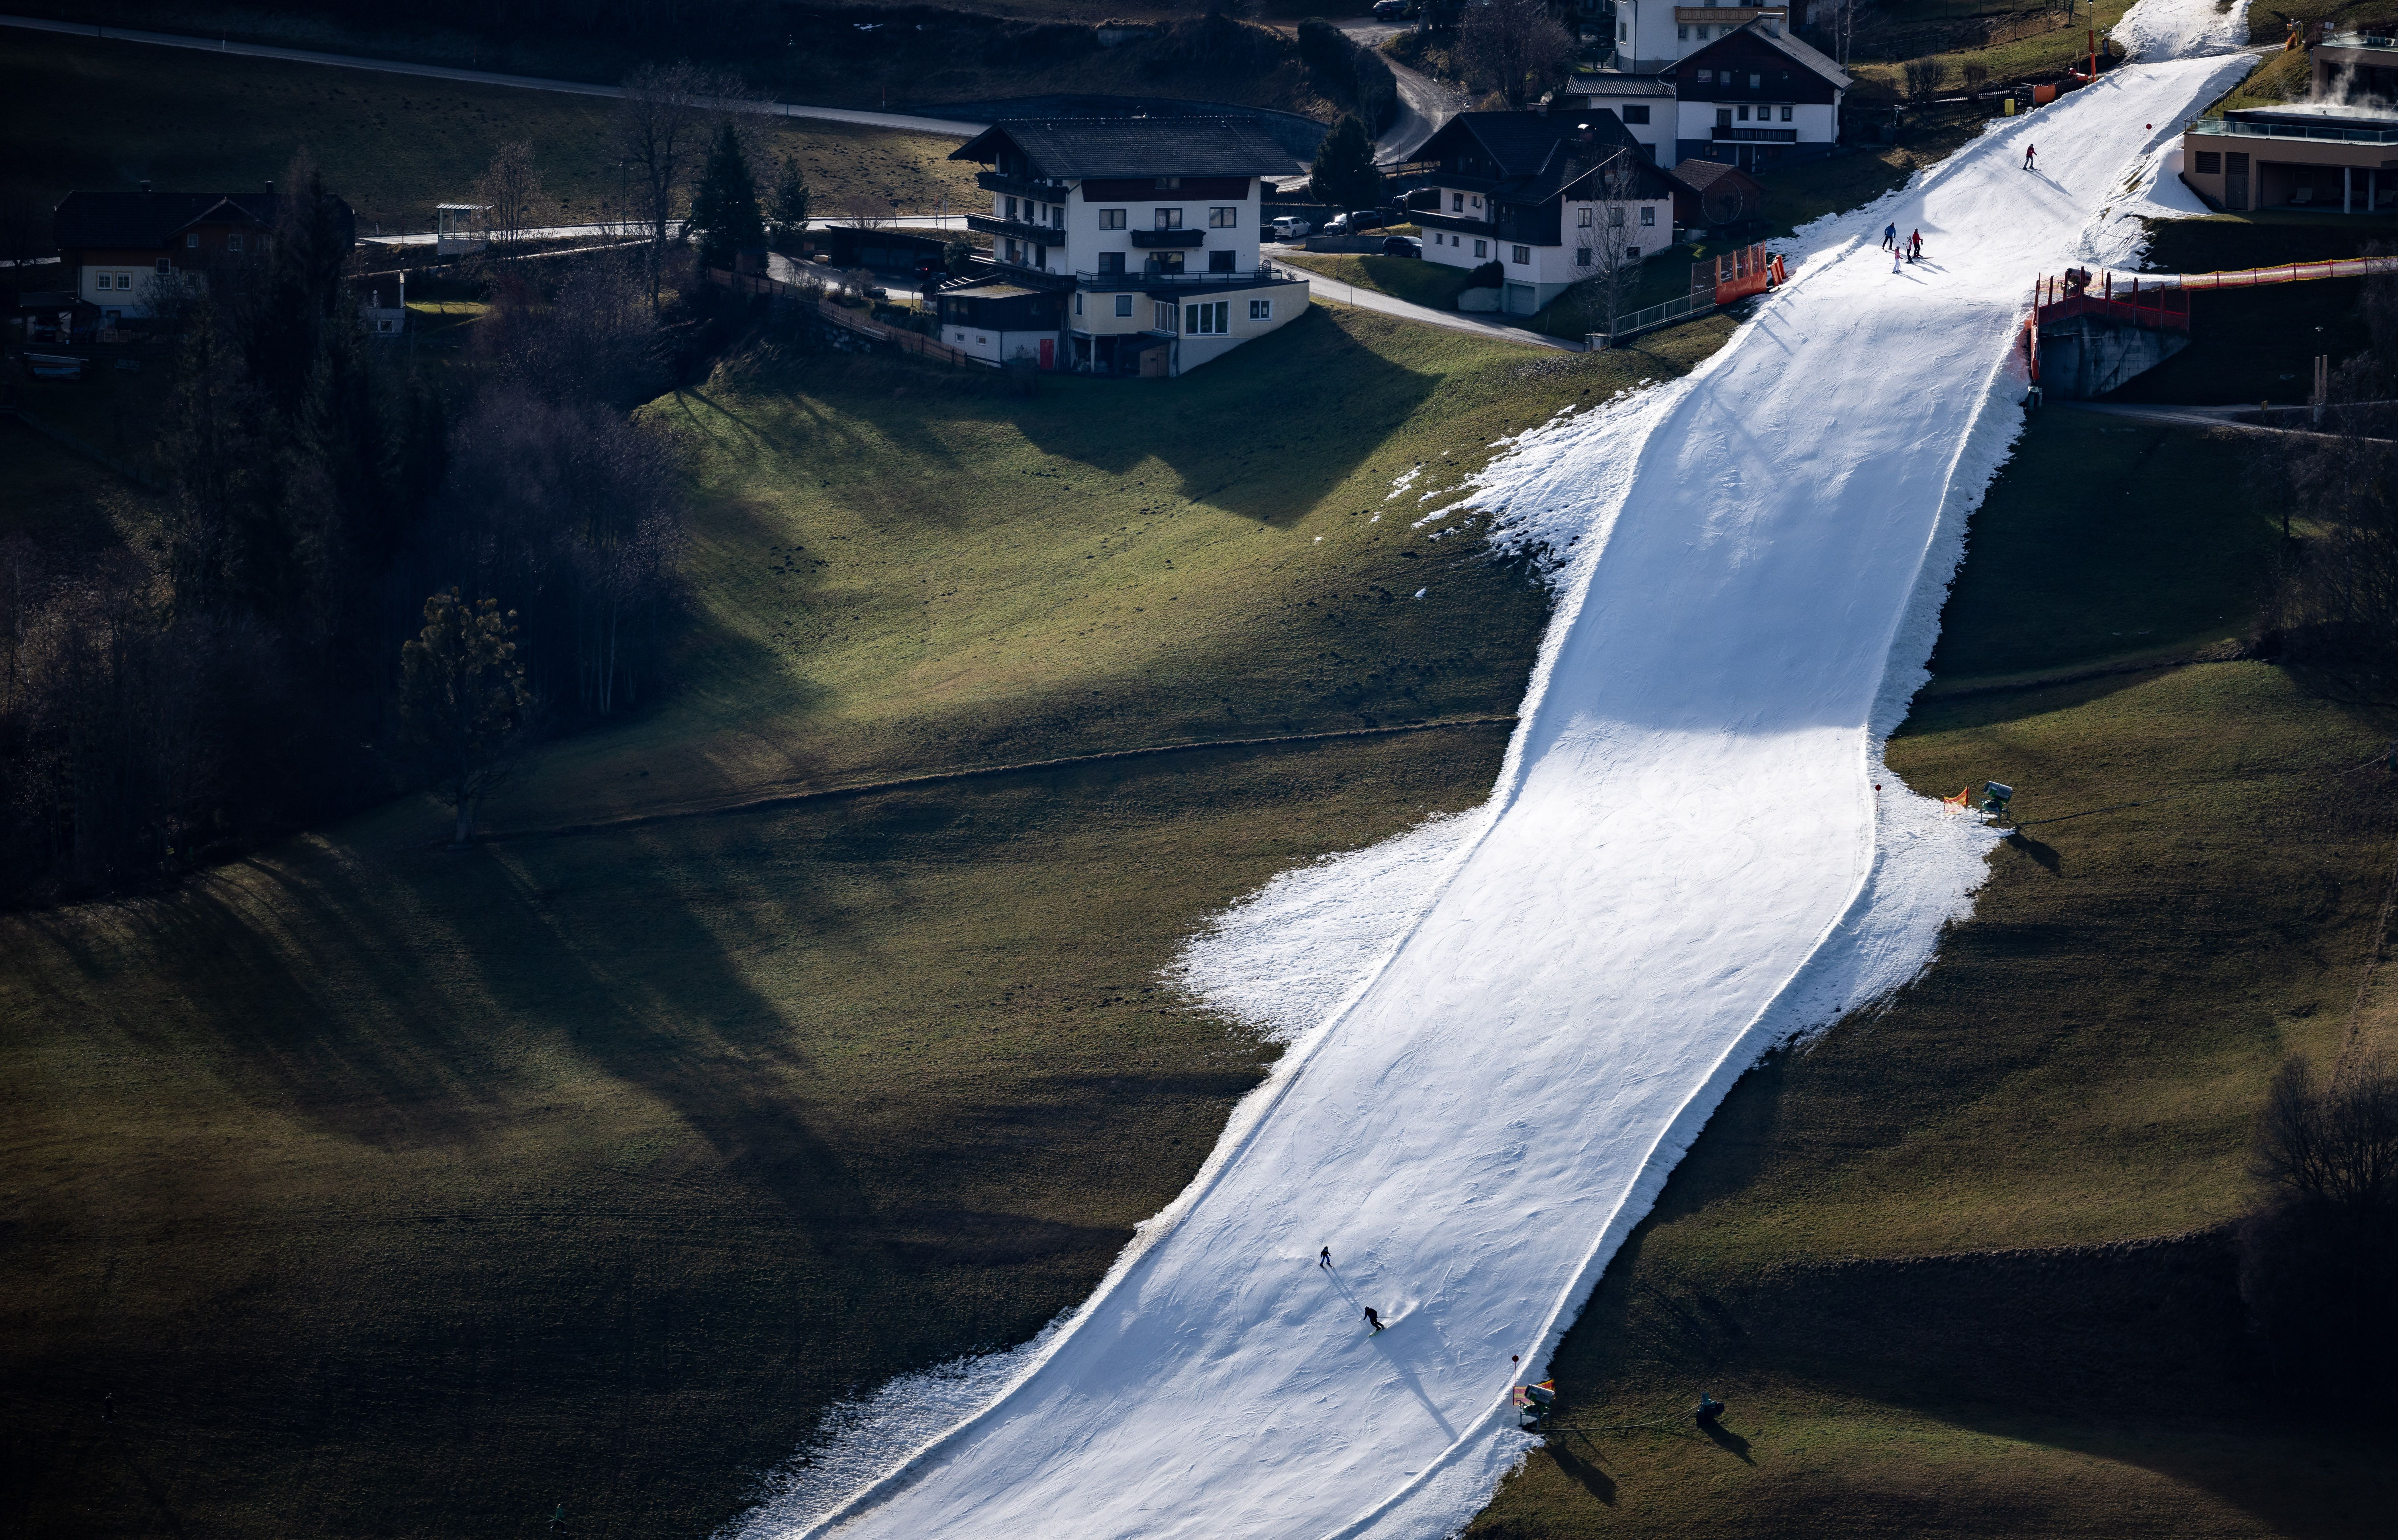 Skiers in Austria